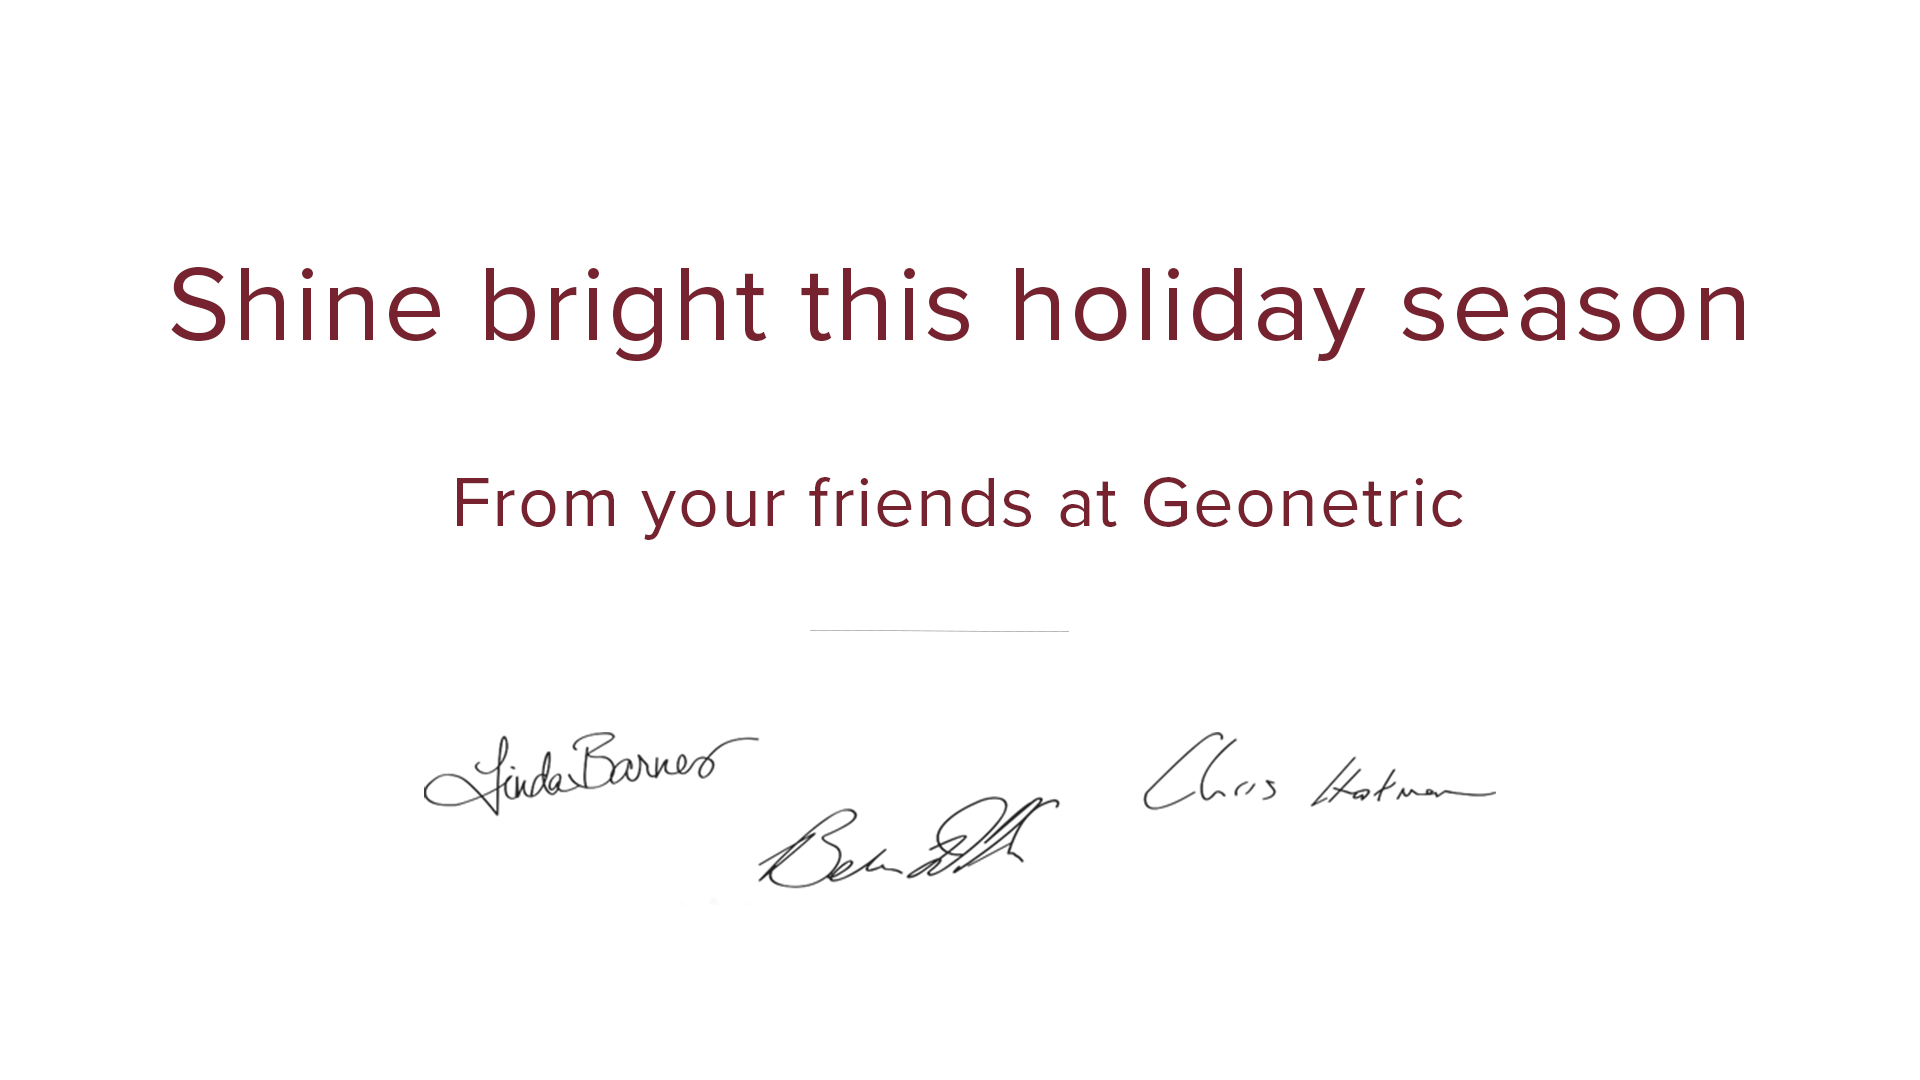 Shine bright this holiday season. From your friends at Geonetric. Linda Barnes, Ben Dillon, Chris Hartman